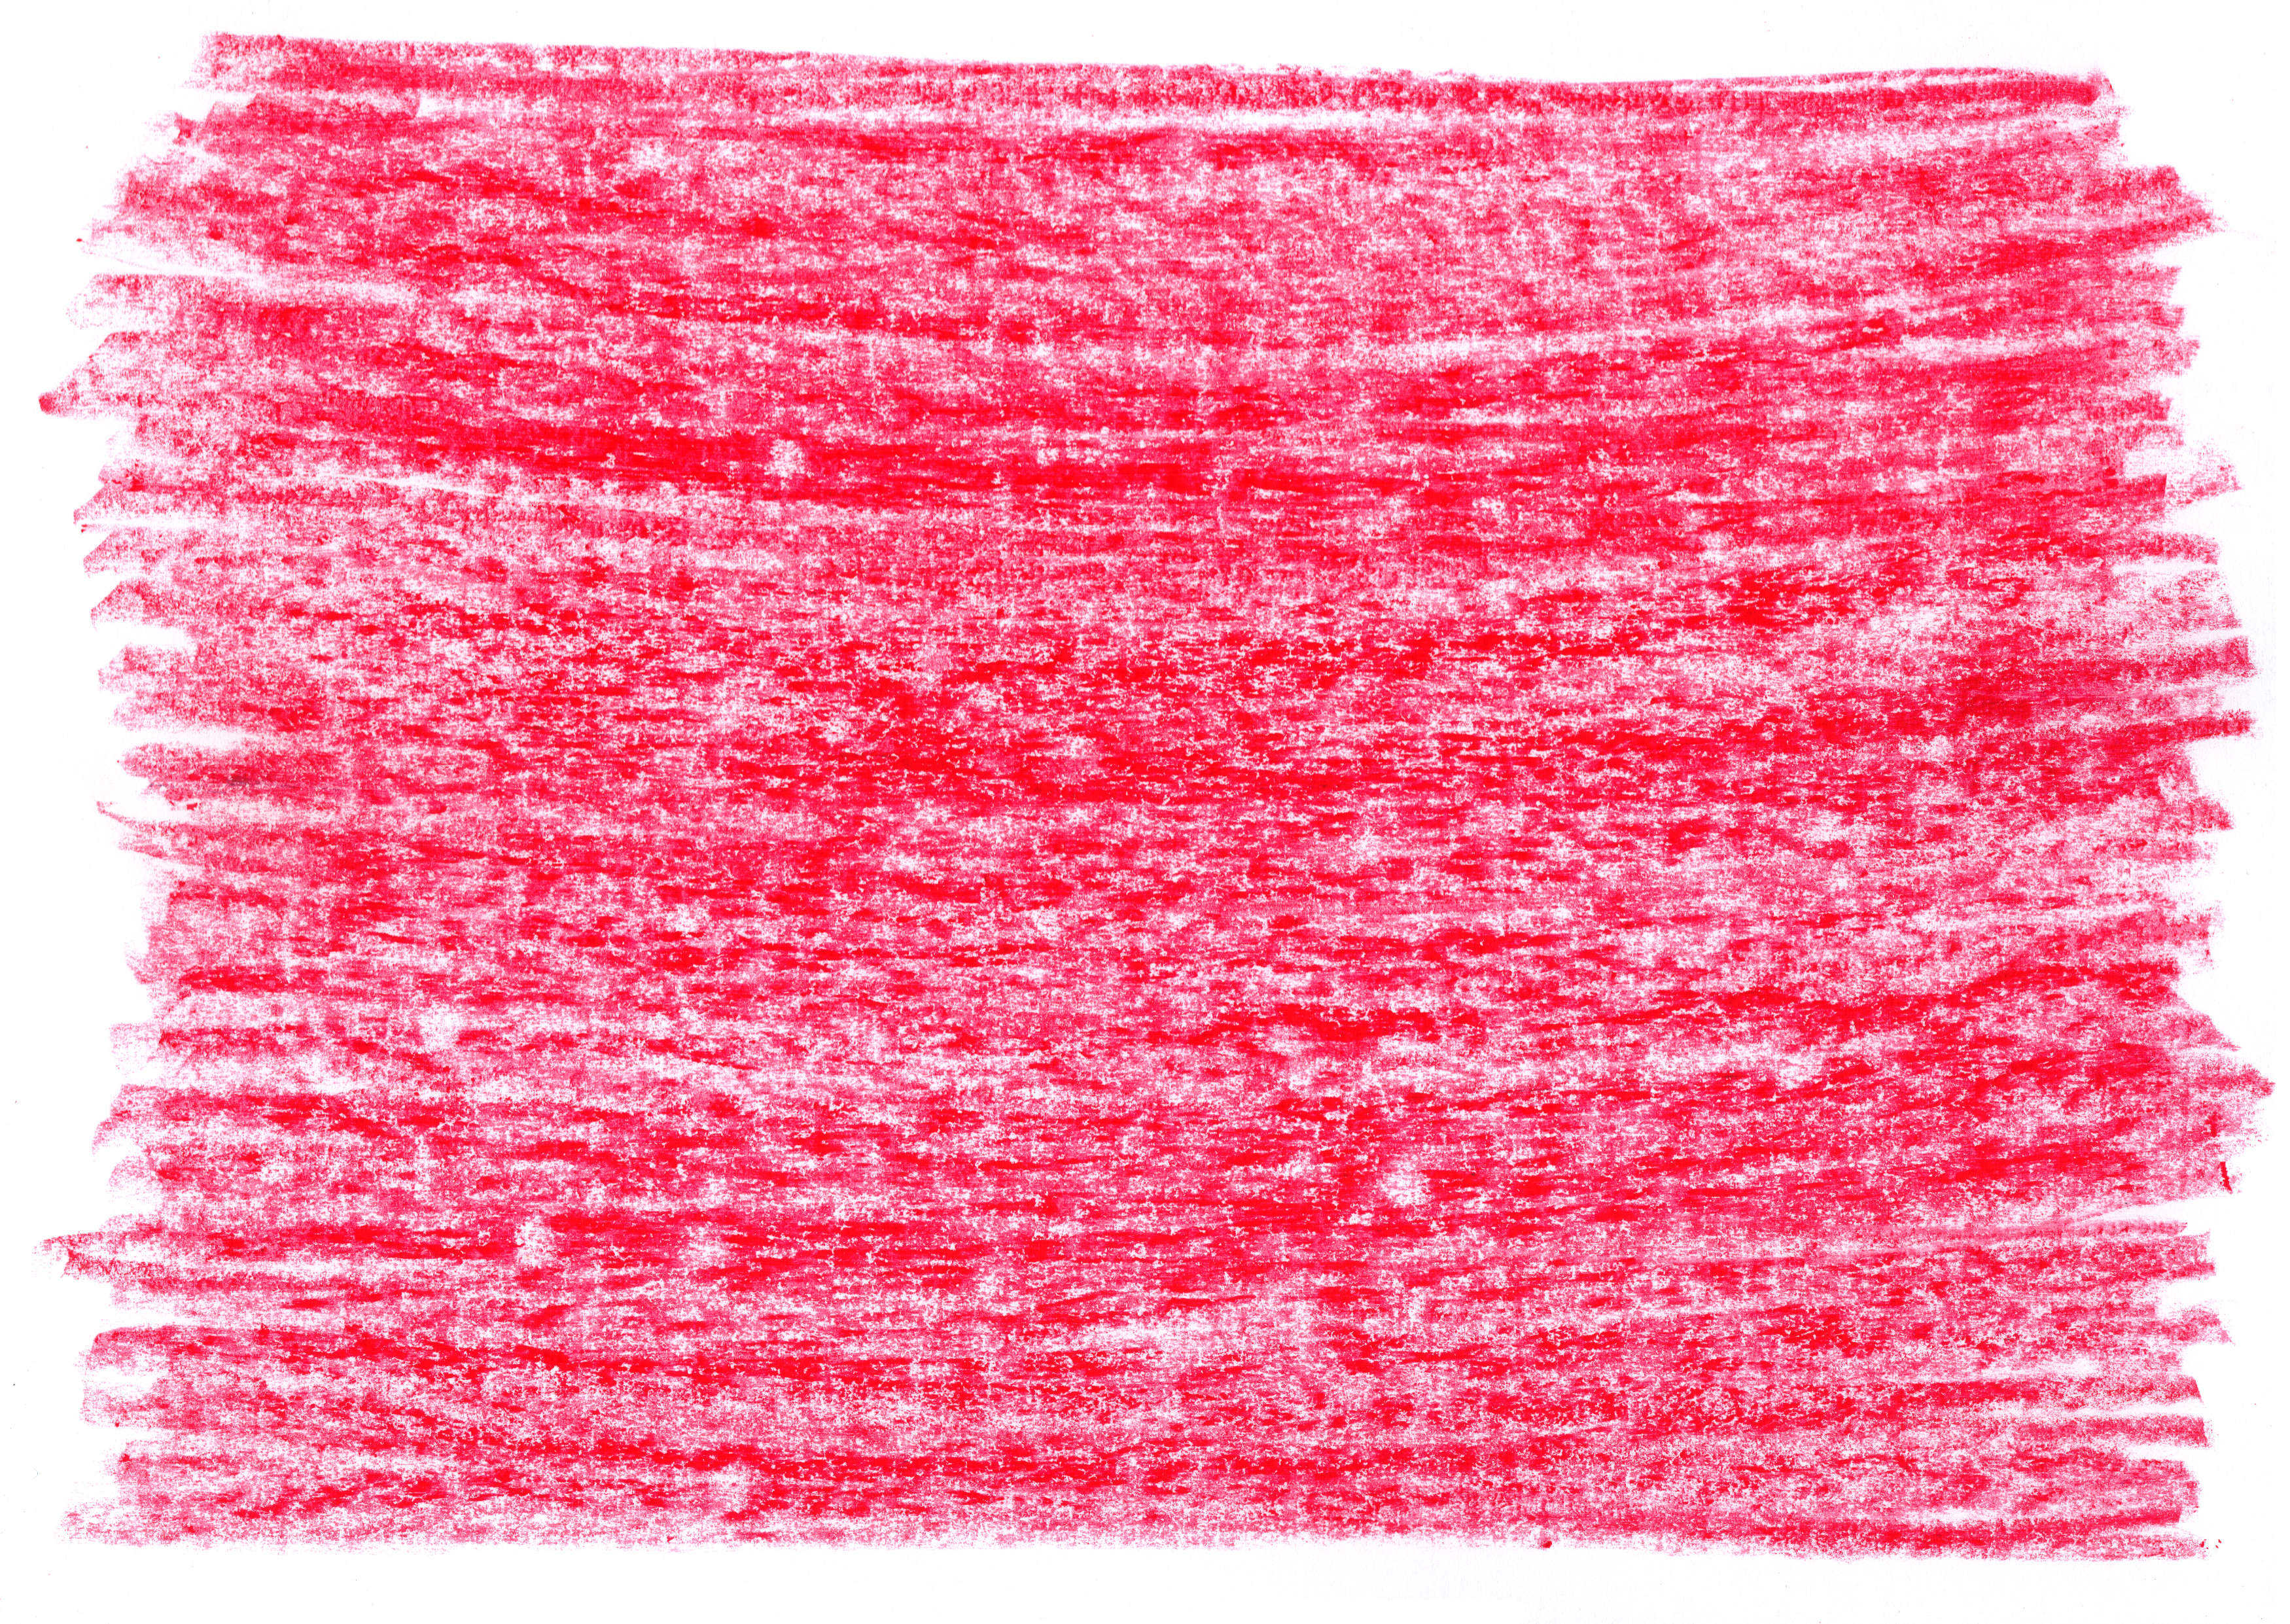 Red Crayon Textures (JPG)